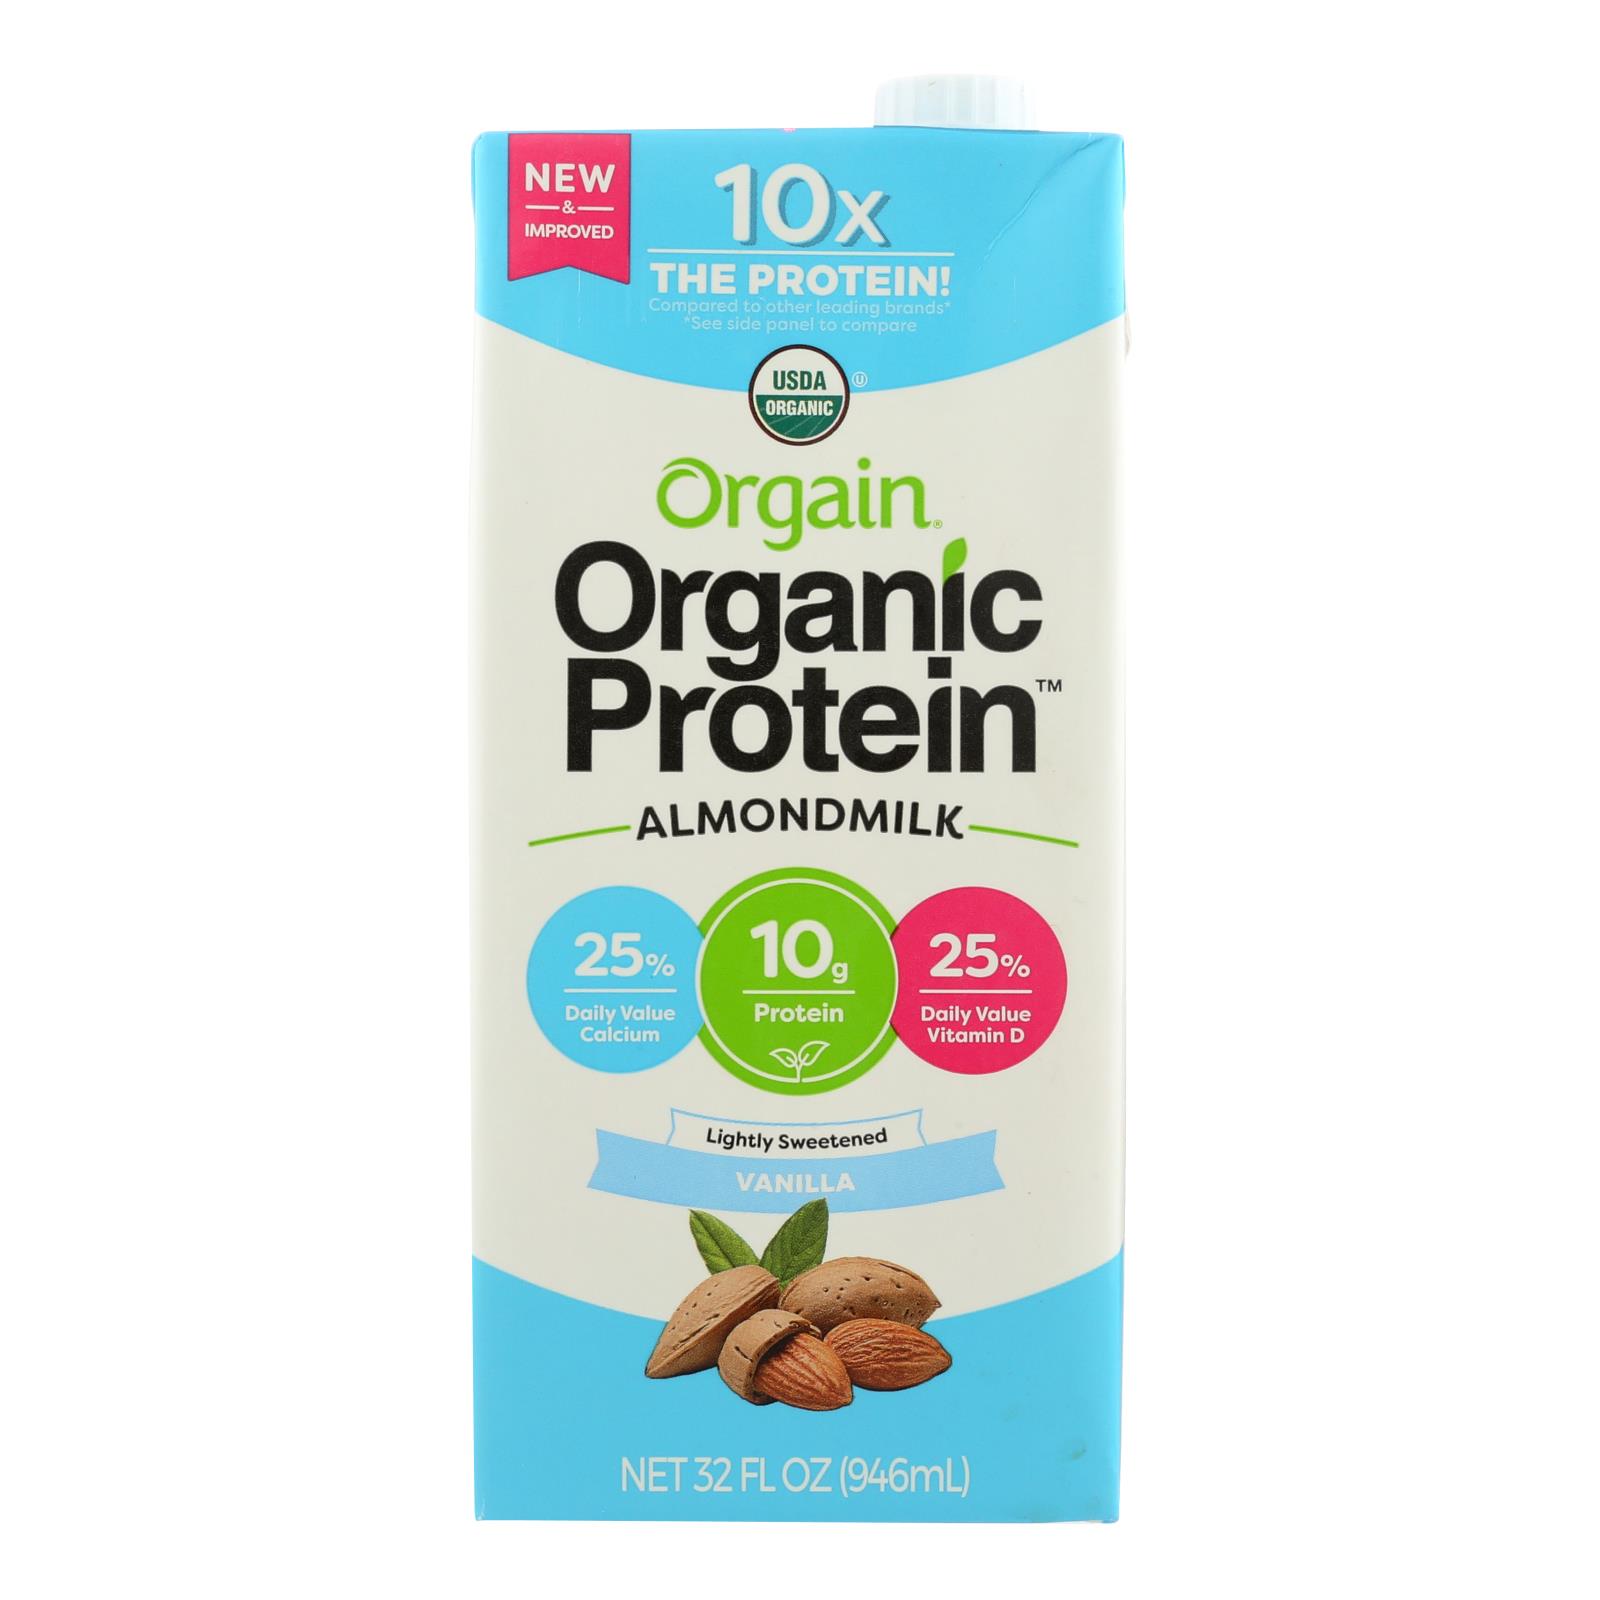 Orgain Organic Protein Almond Milk - Lightly Sweetened Vanilla - 6개 묶음상품 - 32 FZ